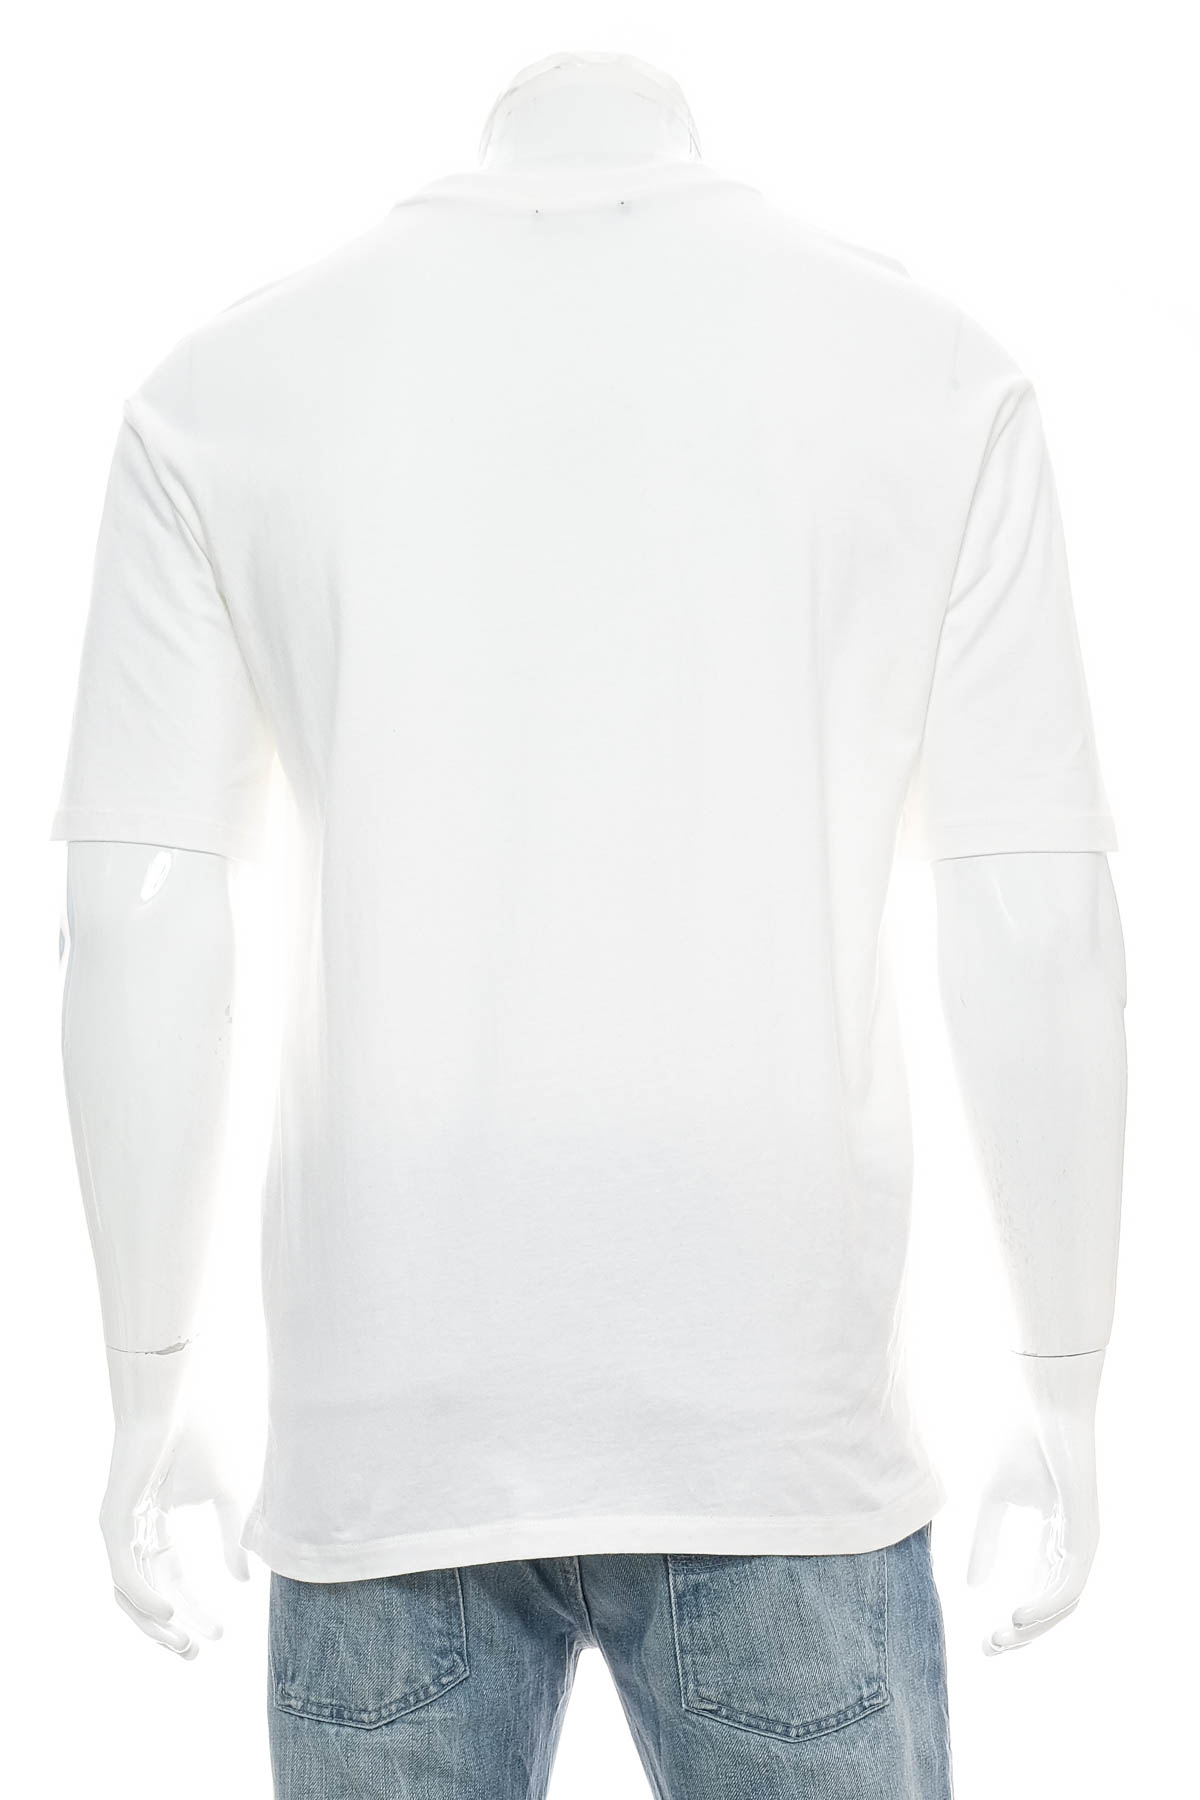 Men's T-shirt - ZARA TRAFALUC - 1